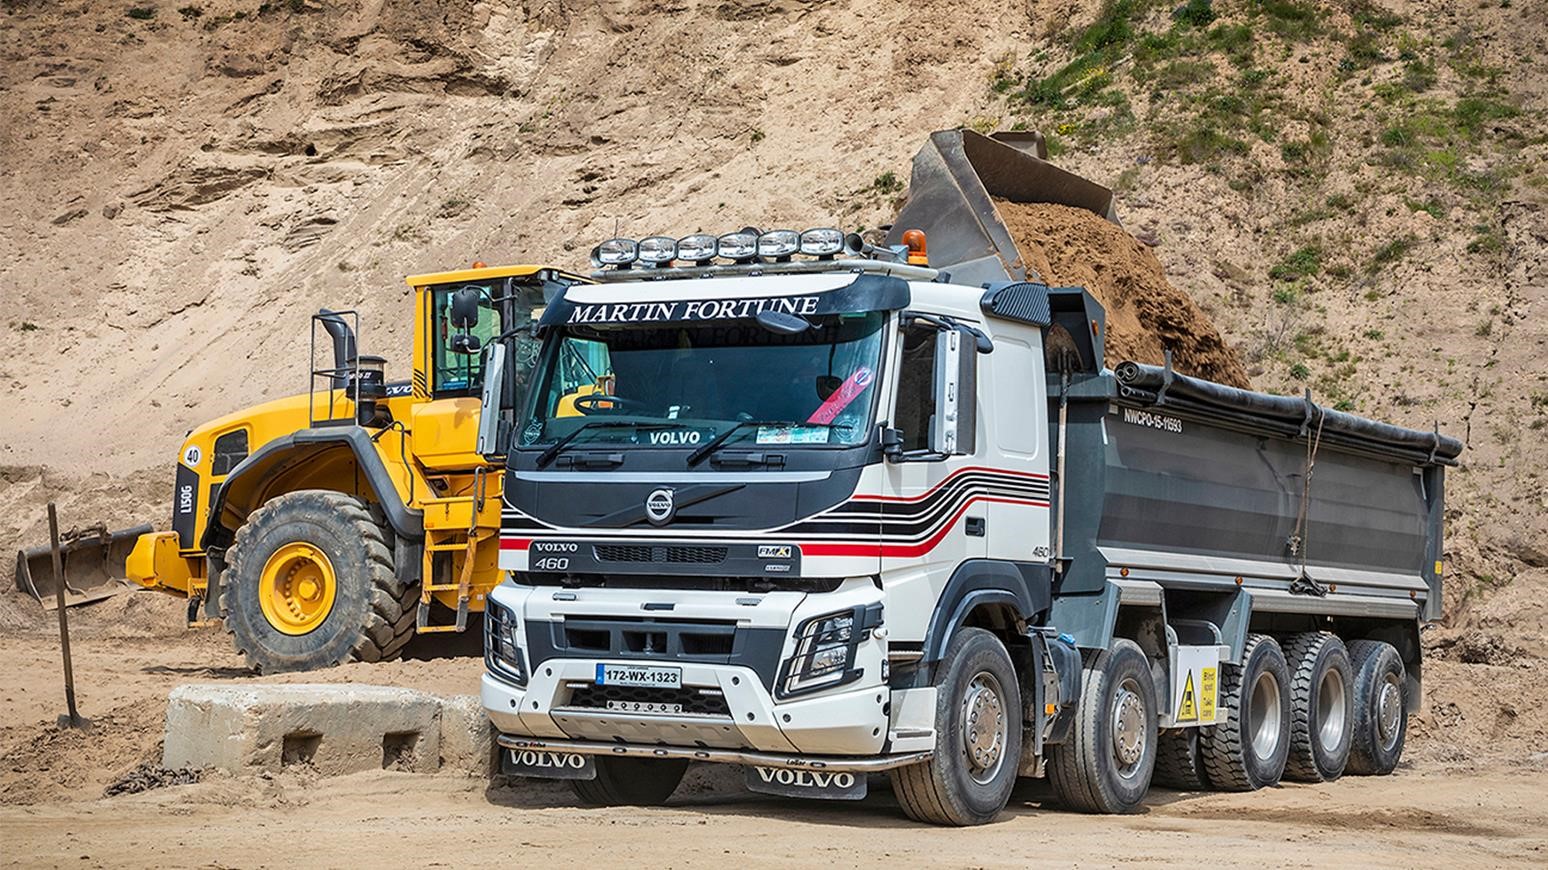 Wexford-Based Martin Fortune Transport Runs All-Volvo Fleet, Including Two 10x4 FMX Tipper Trucks